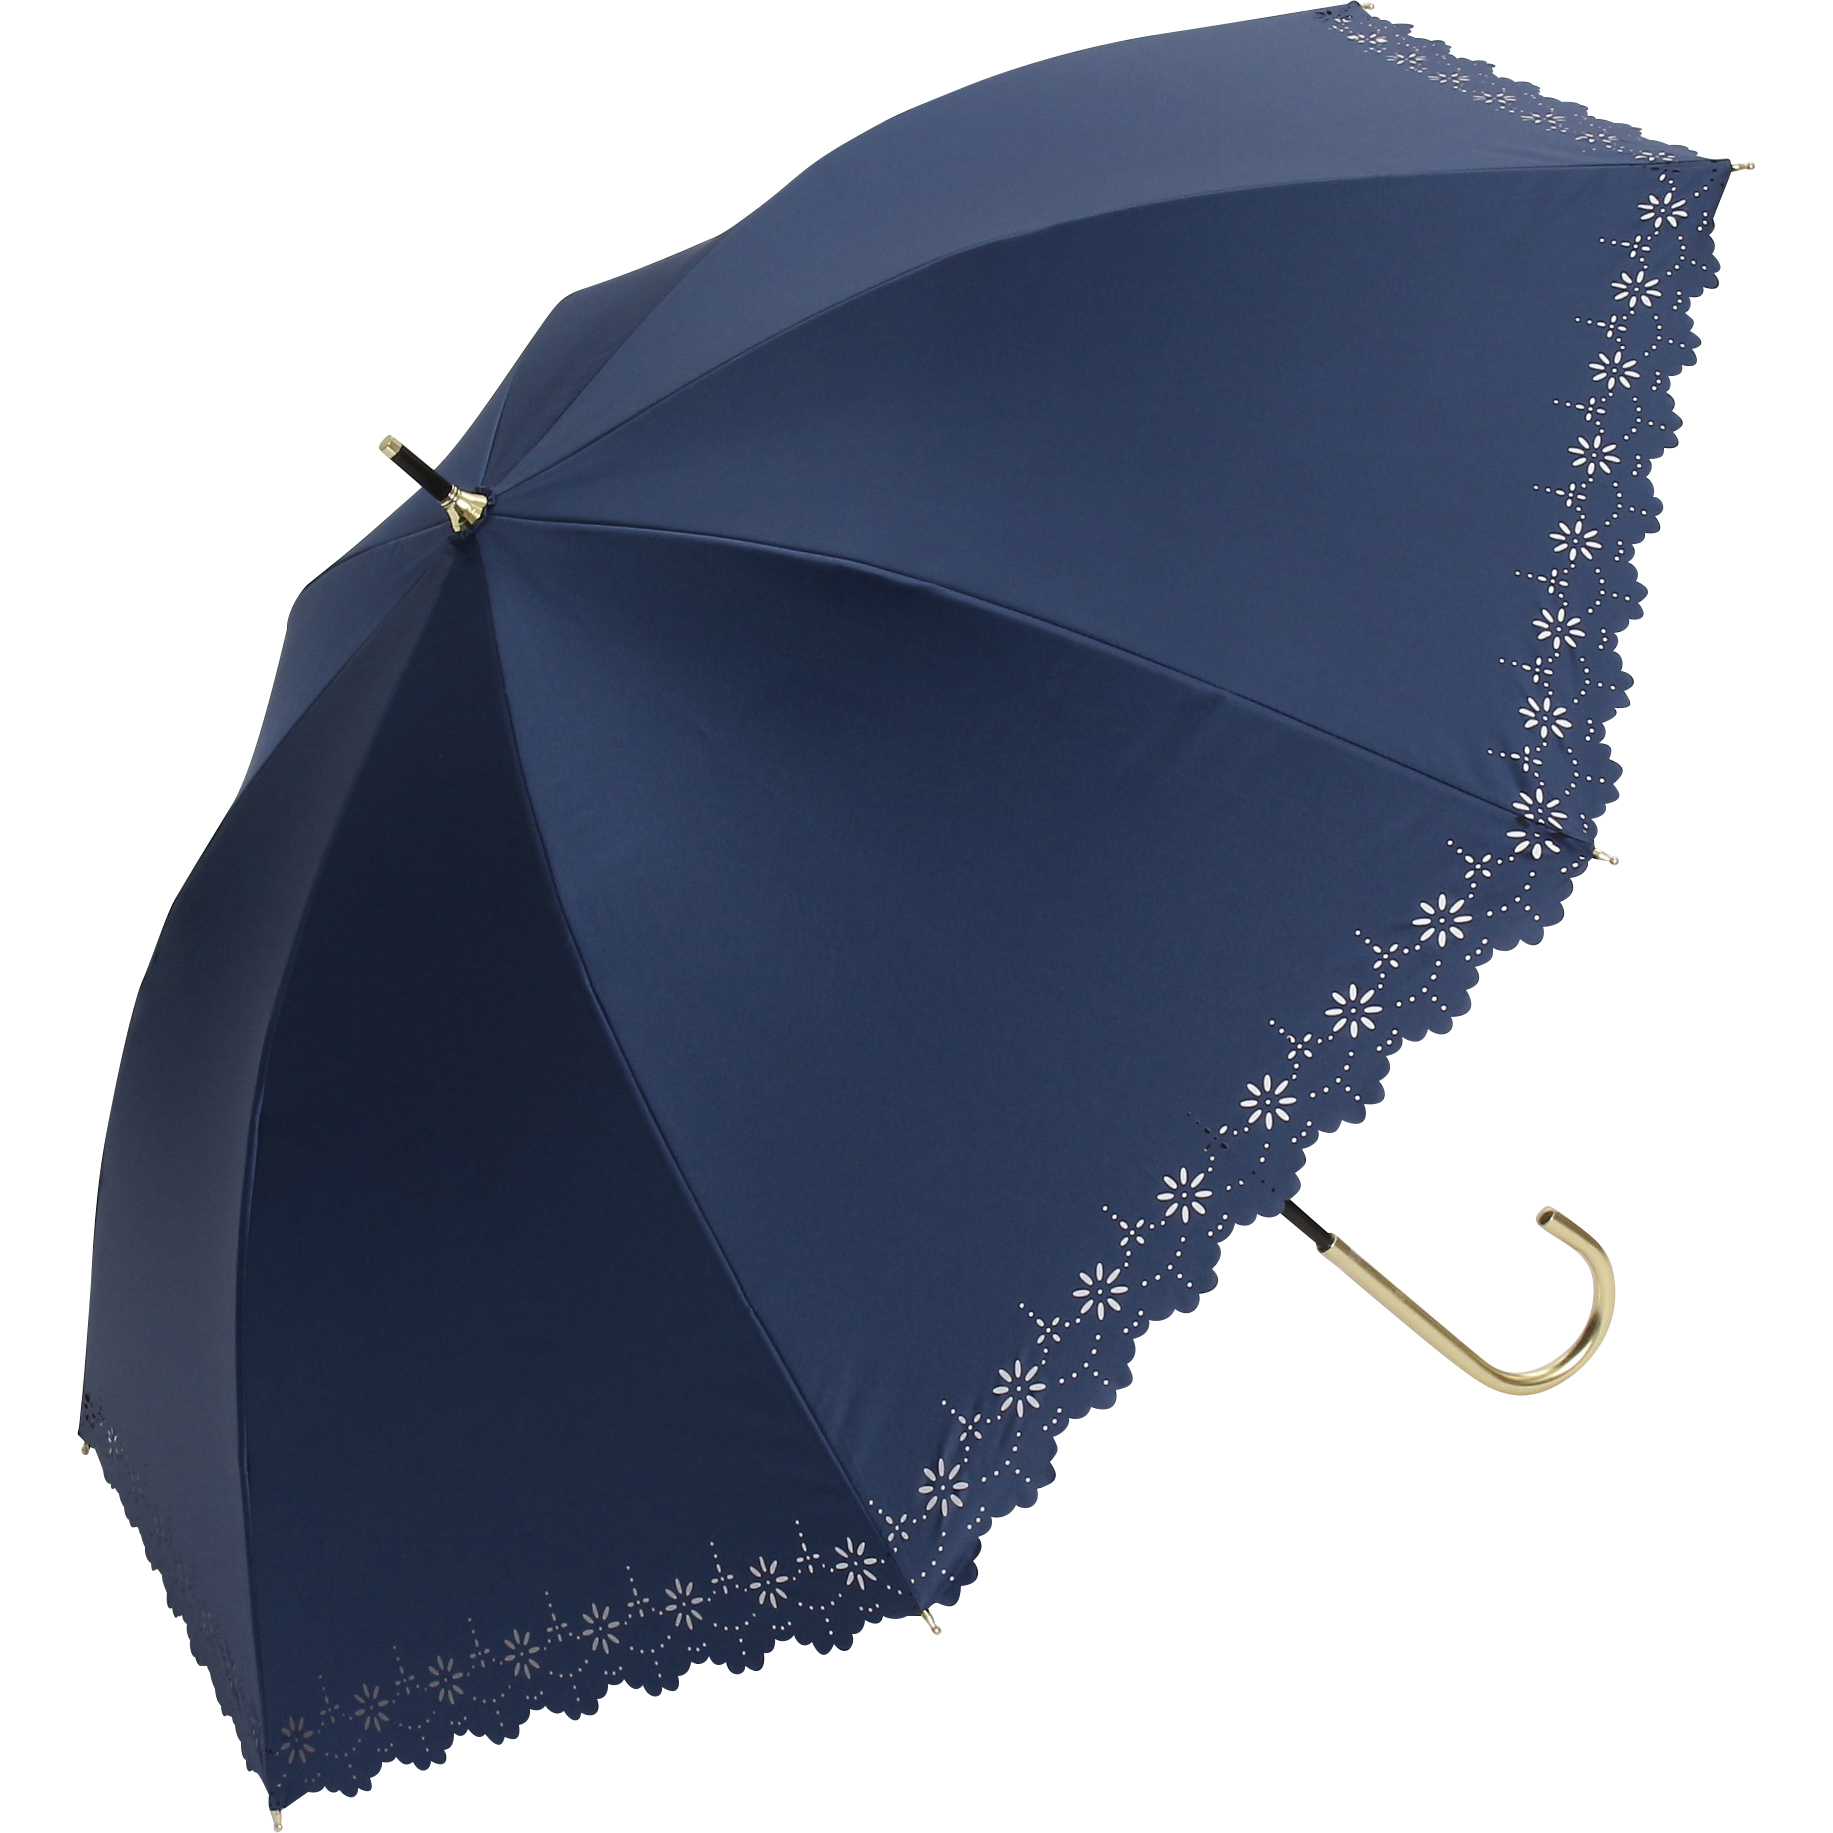 a.s.s.a 公式 日傘 軽量 レディース 傘 晴雨兼用 遮光 遮熱 紫外線遮蔽 uvカット ブラ...